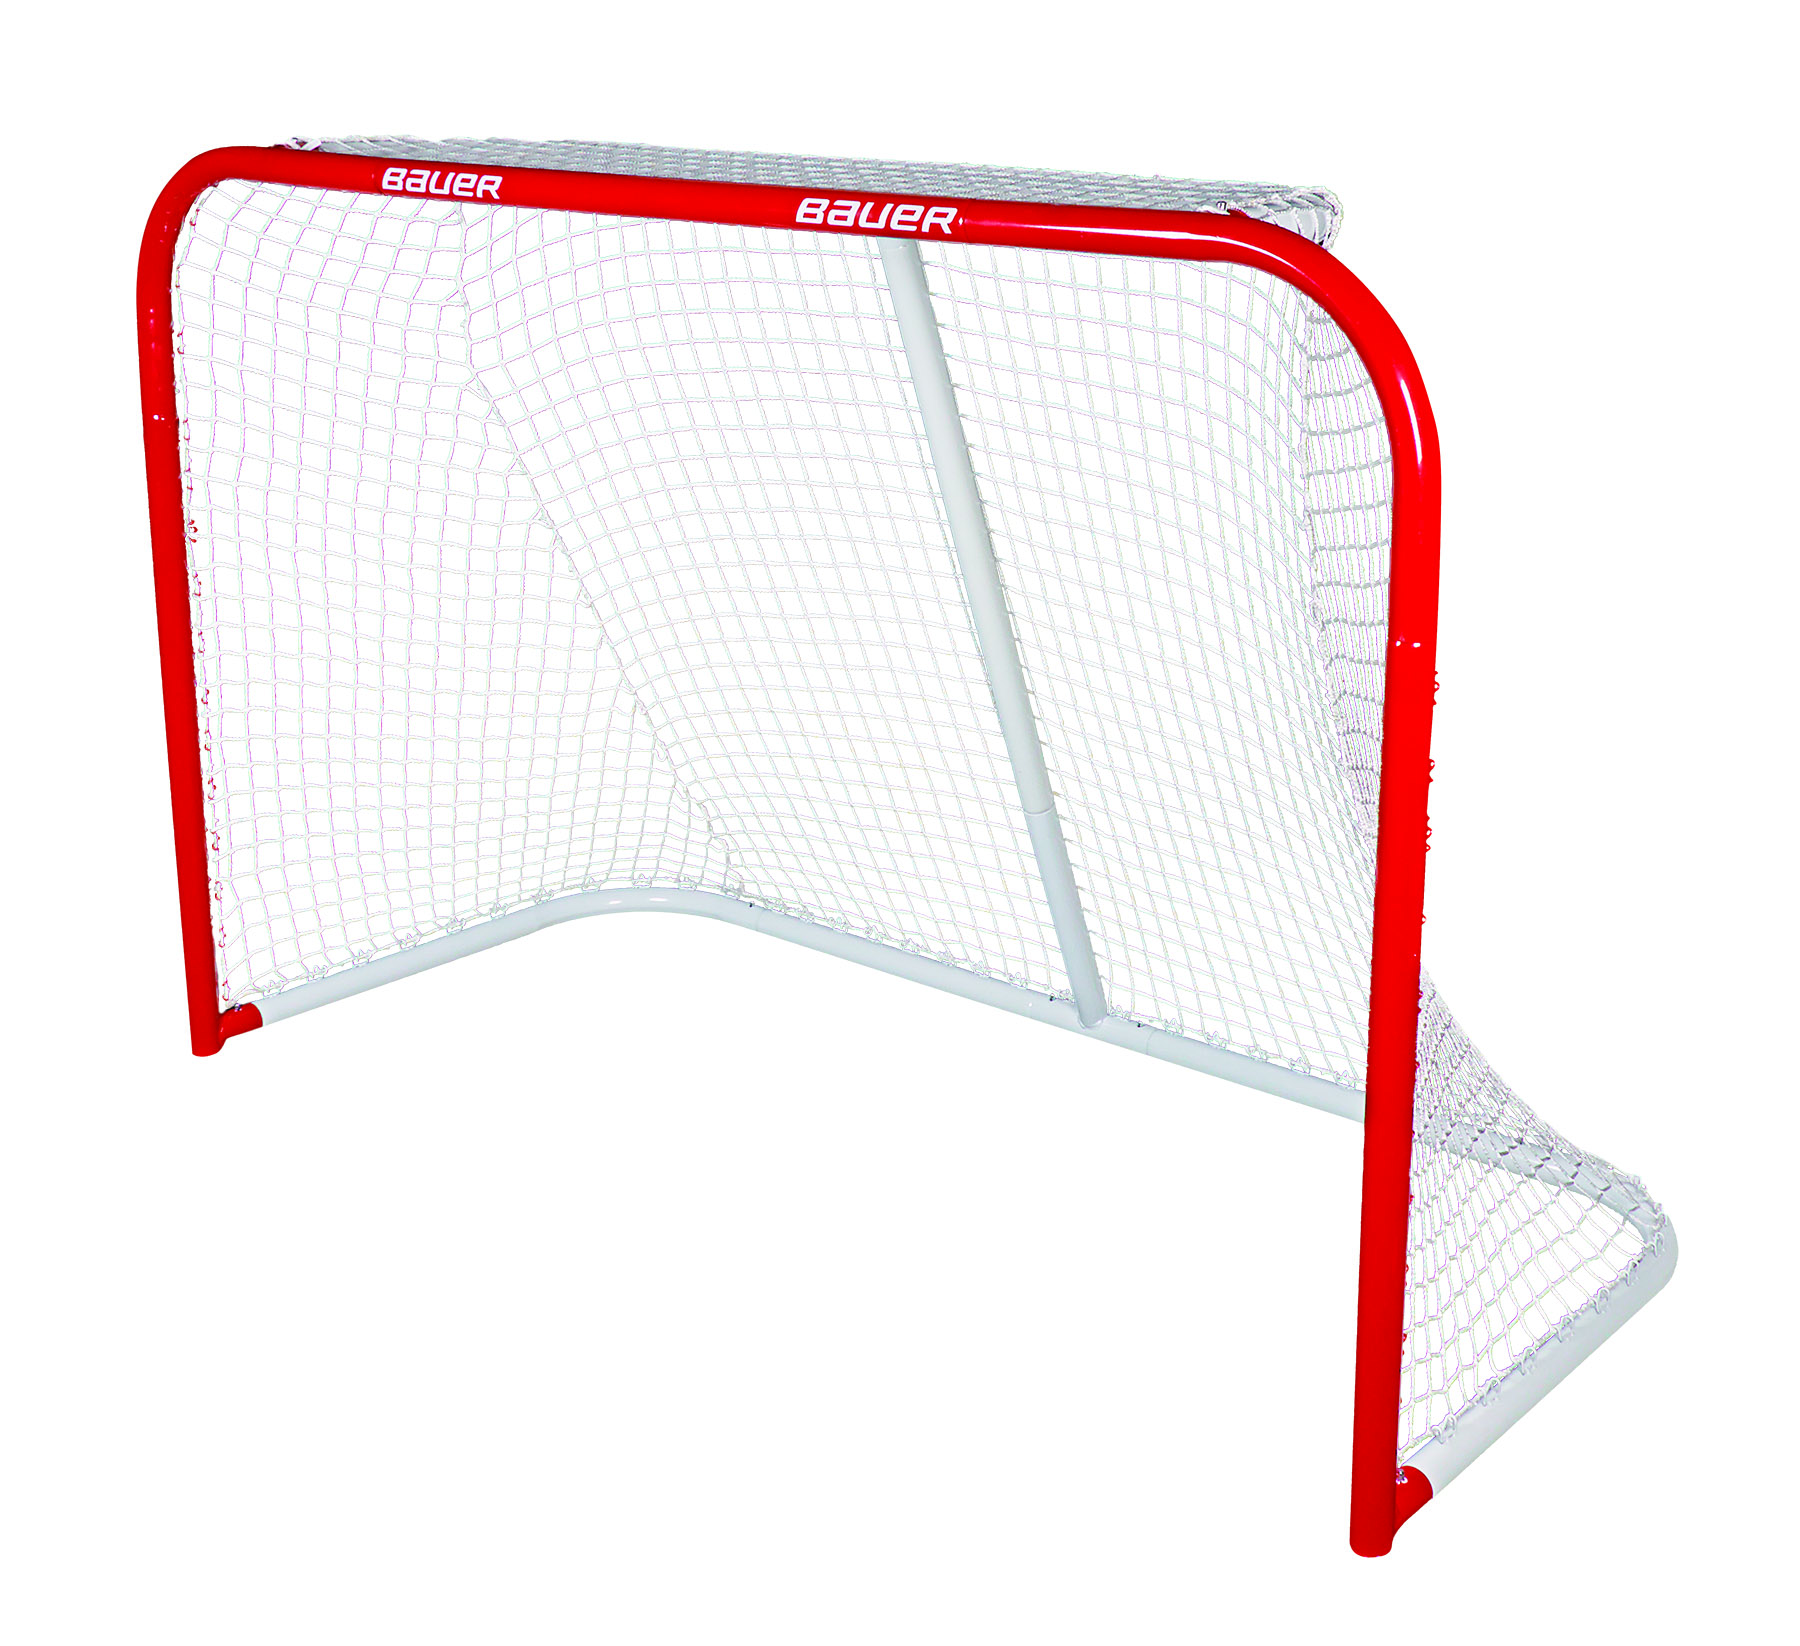 Steel ice hockey gate with a net